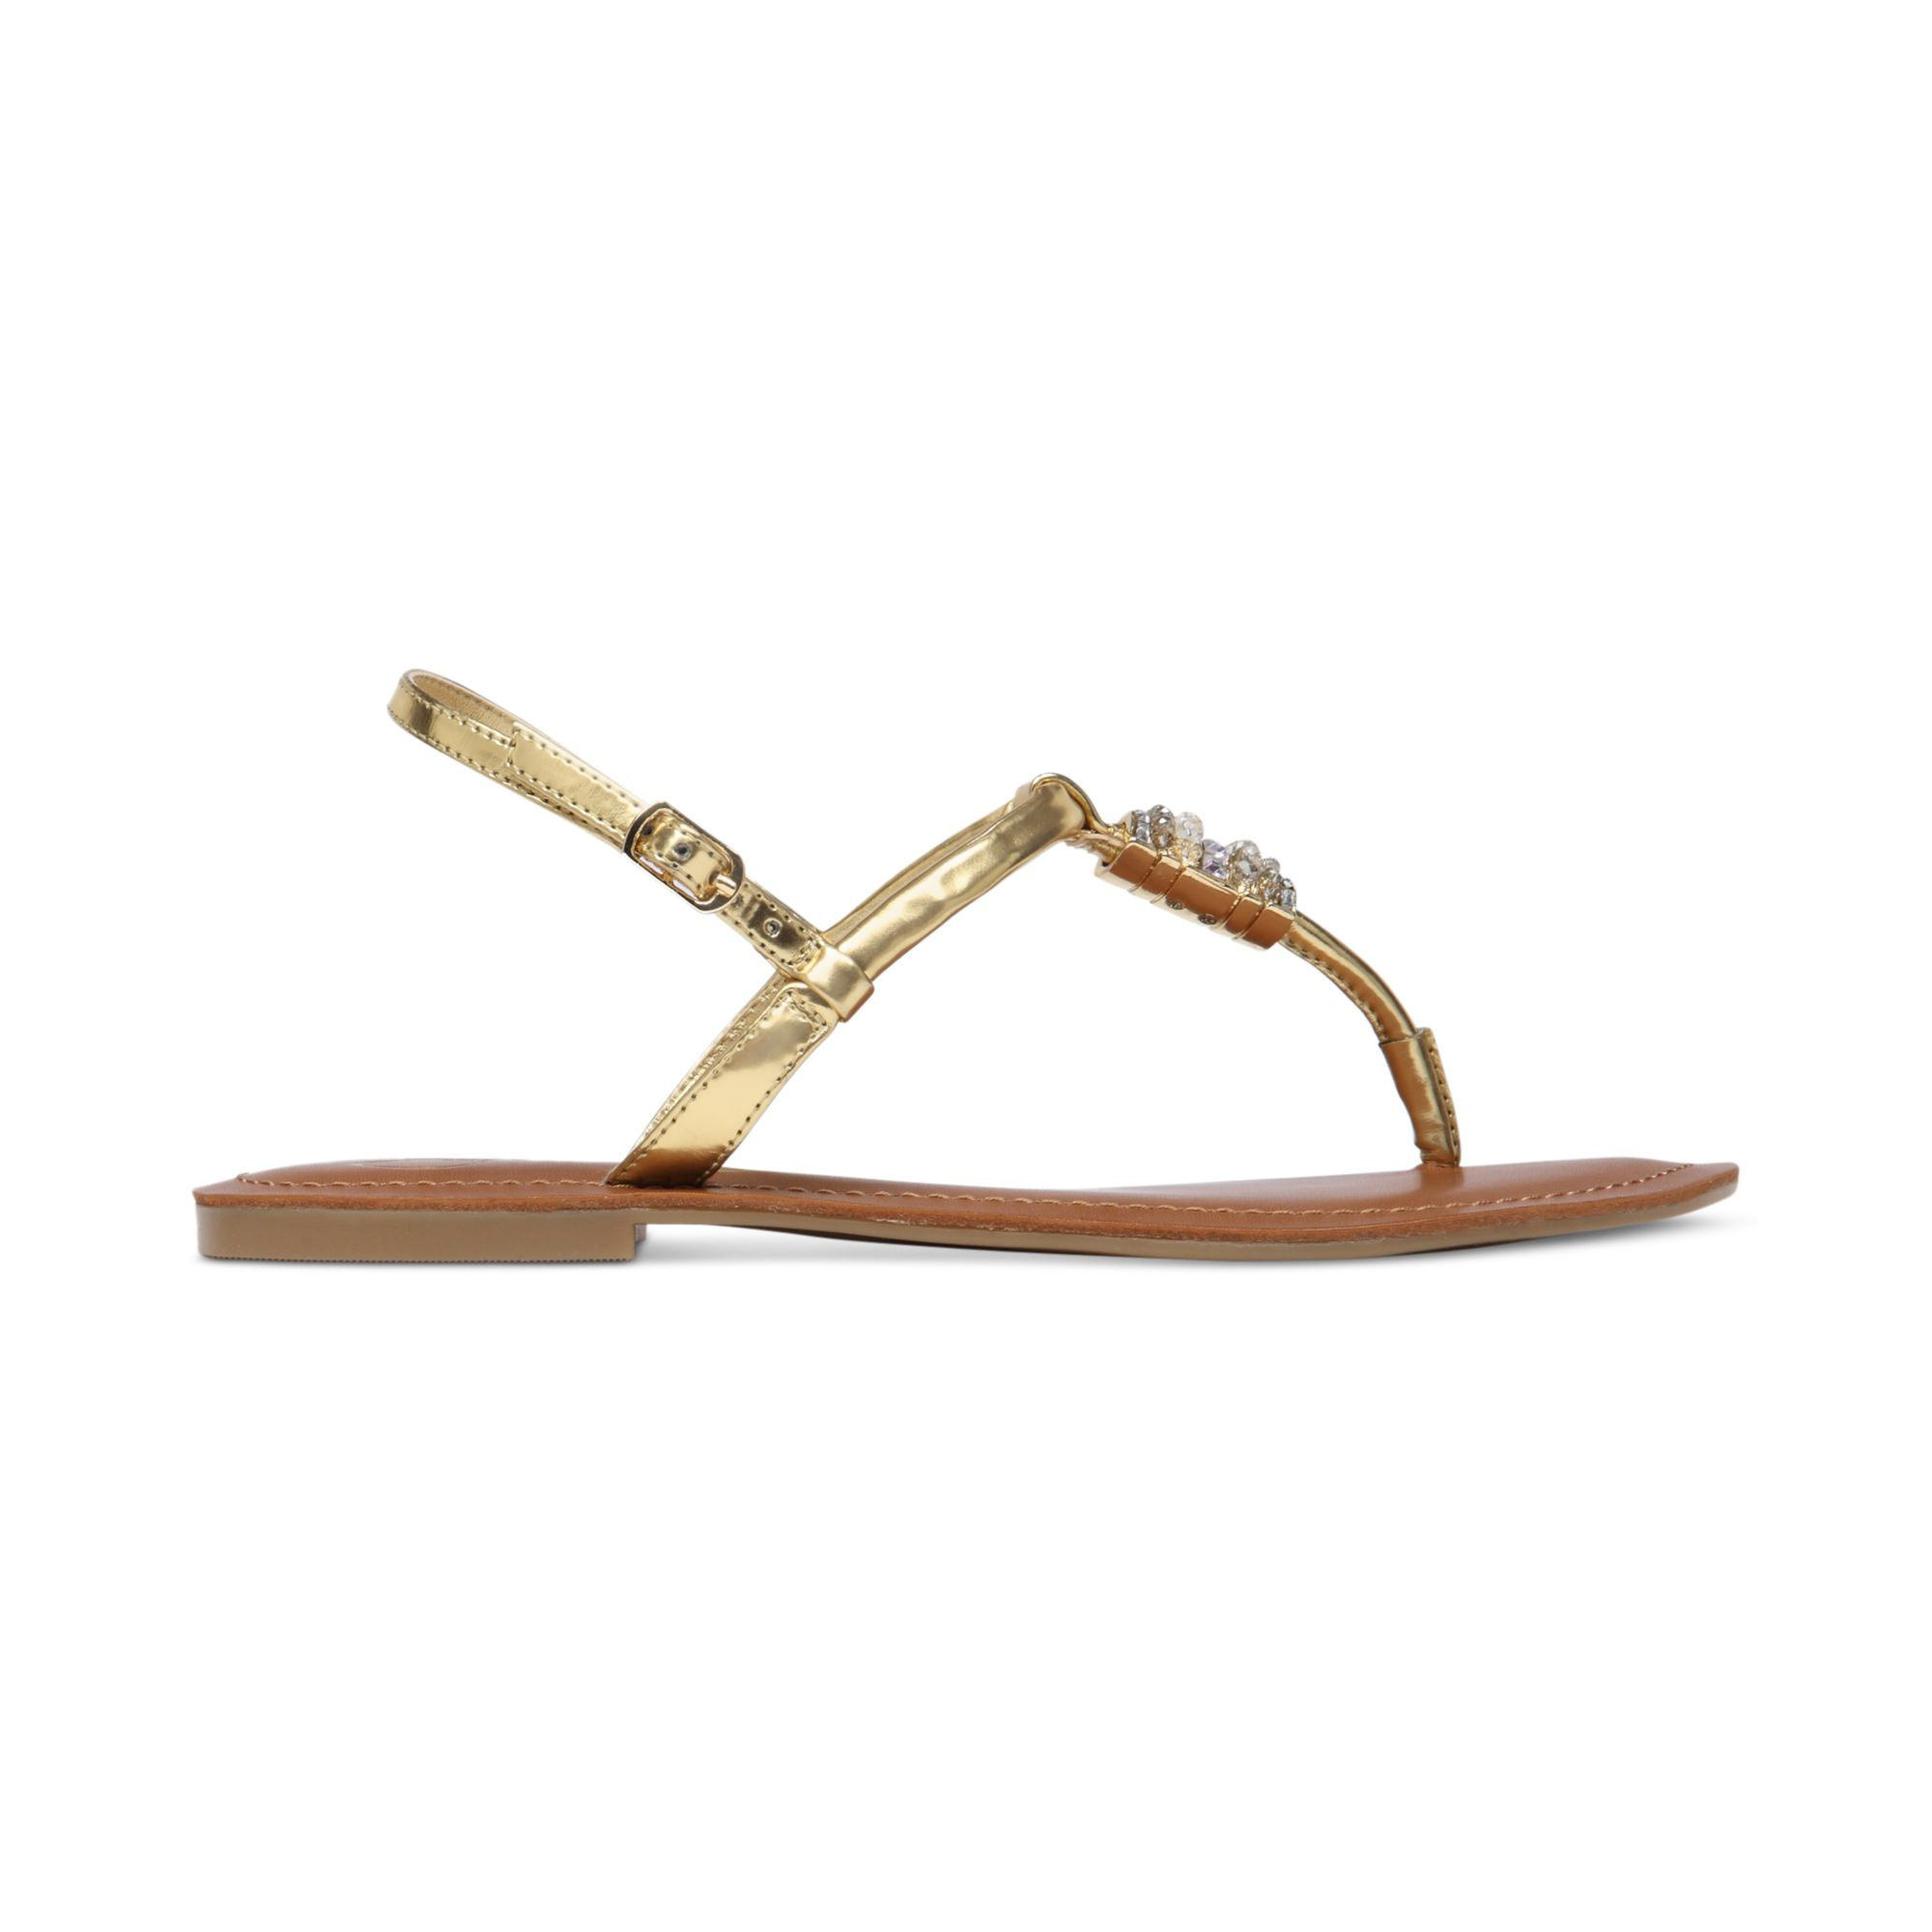 Jessica Simpson Regattah Flat Thong Sandals in Gold (Gold Metallic) | Lyst